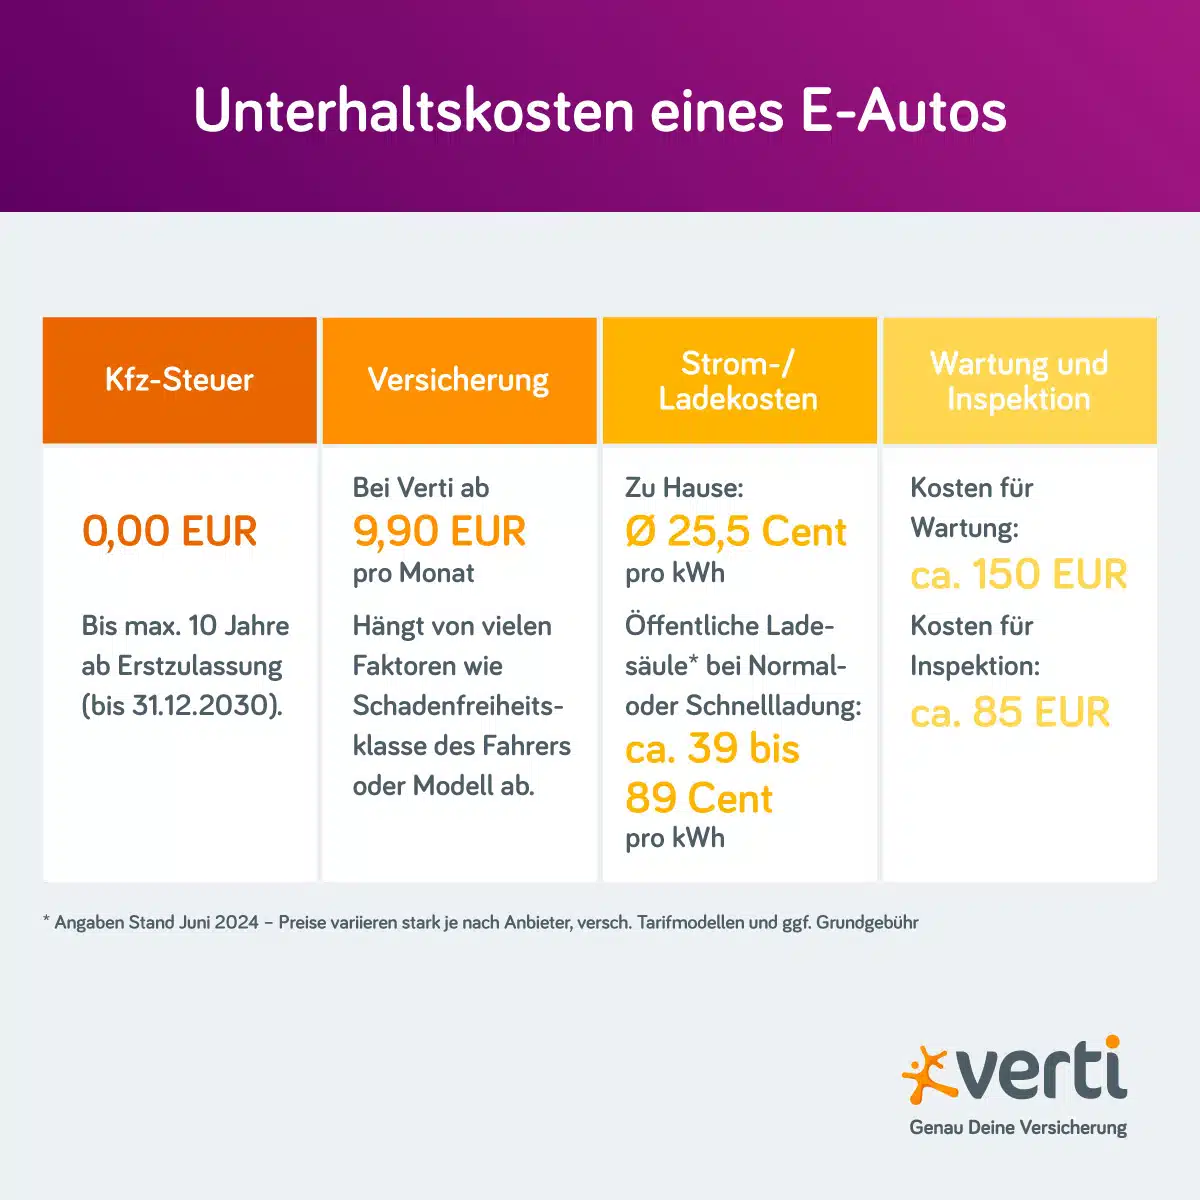 E-Auto-Unterhaltskosten